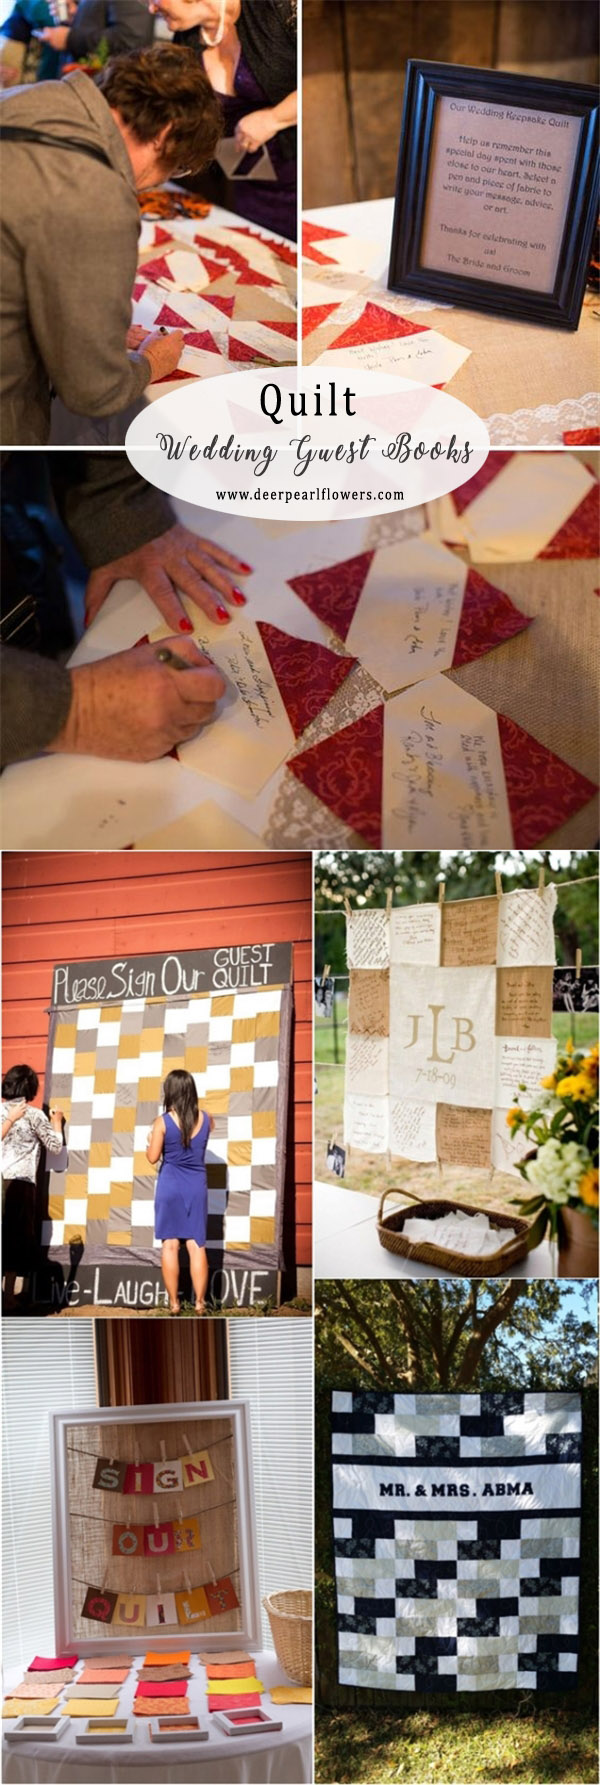 DIY wedding idea - quilt wedding guest book ideas